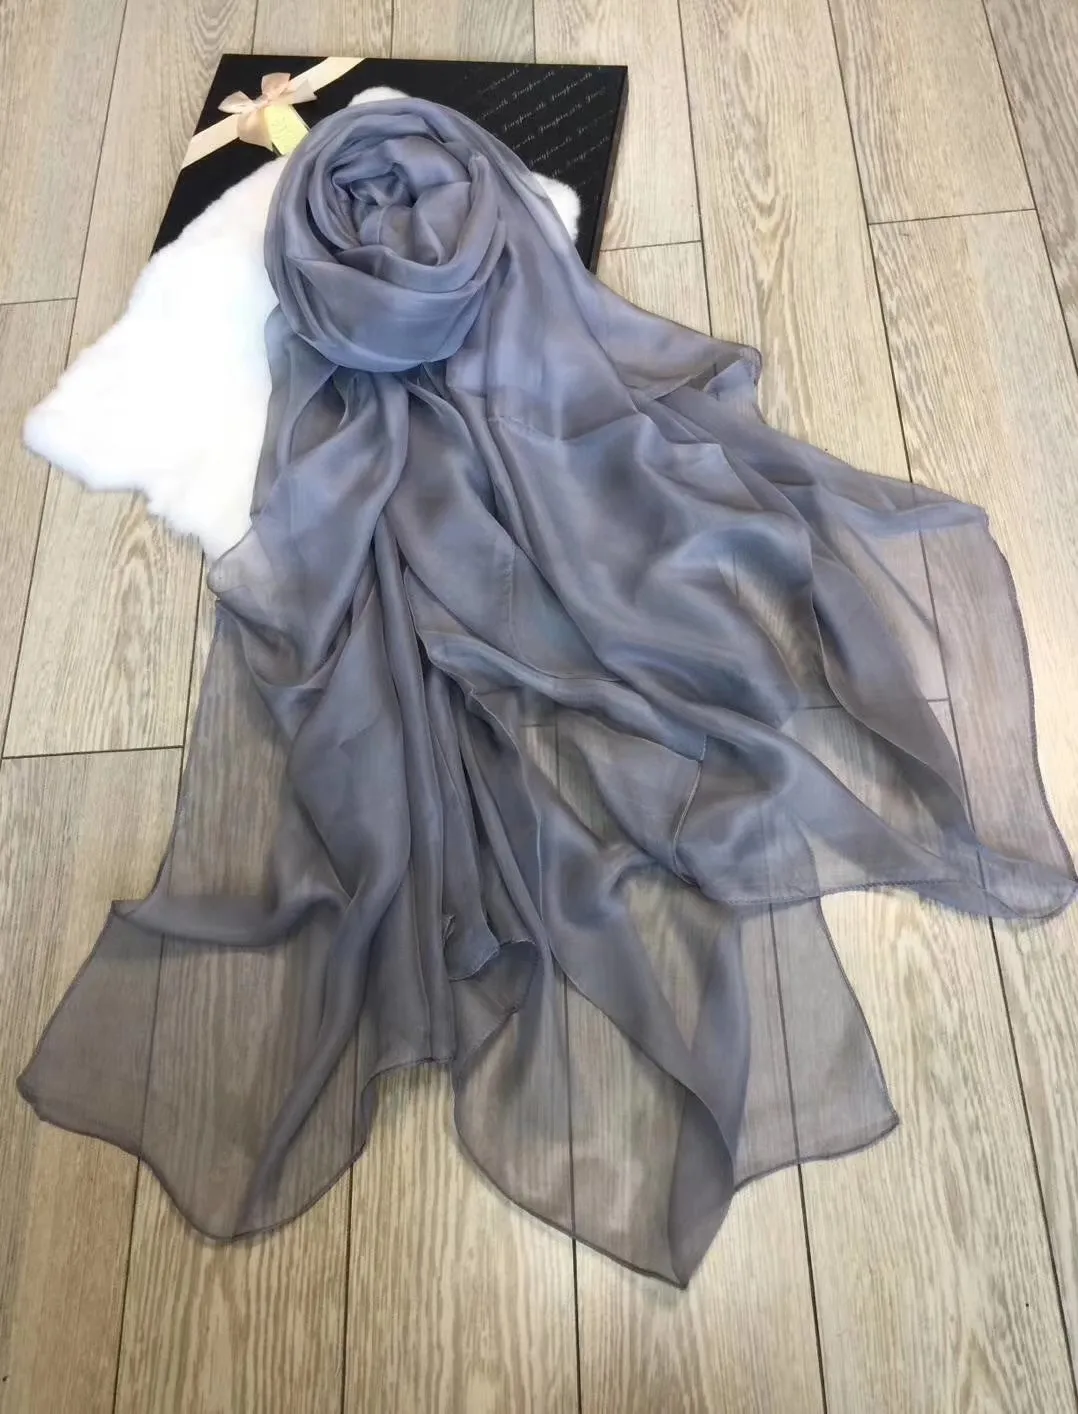 Ny tjejkvinnor Solid Chiffon Silk Stor Scarf Scarves Shawl Wrap Gift Accessory 200 * 150cm # 4076